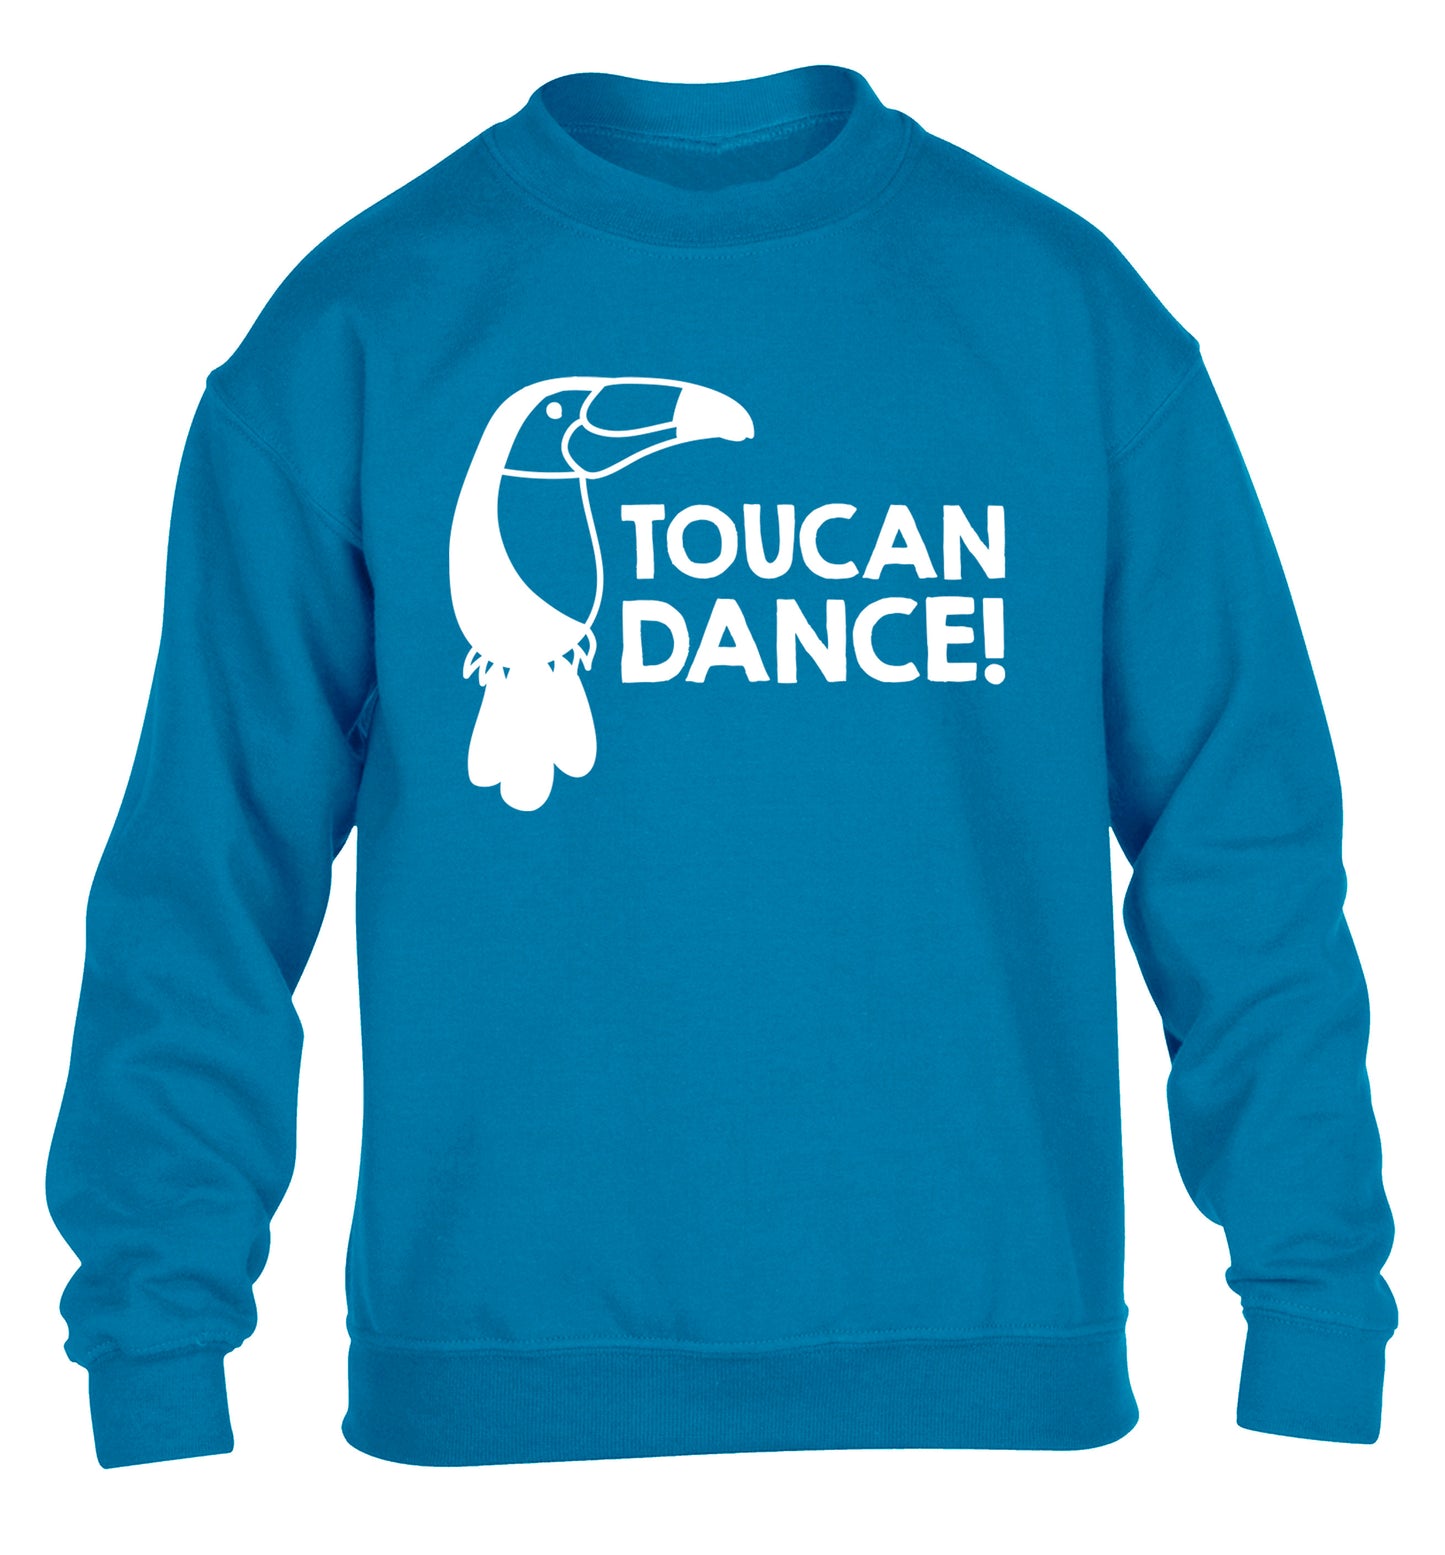 Toucan dance children's blue sweater 12-13 Years